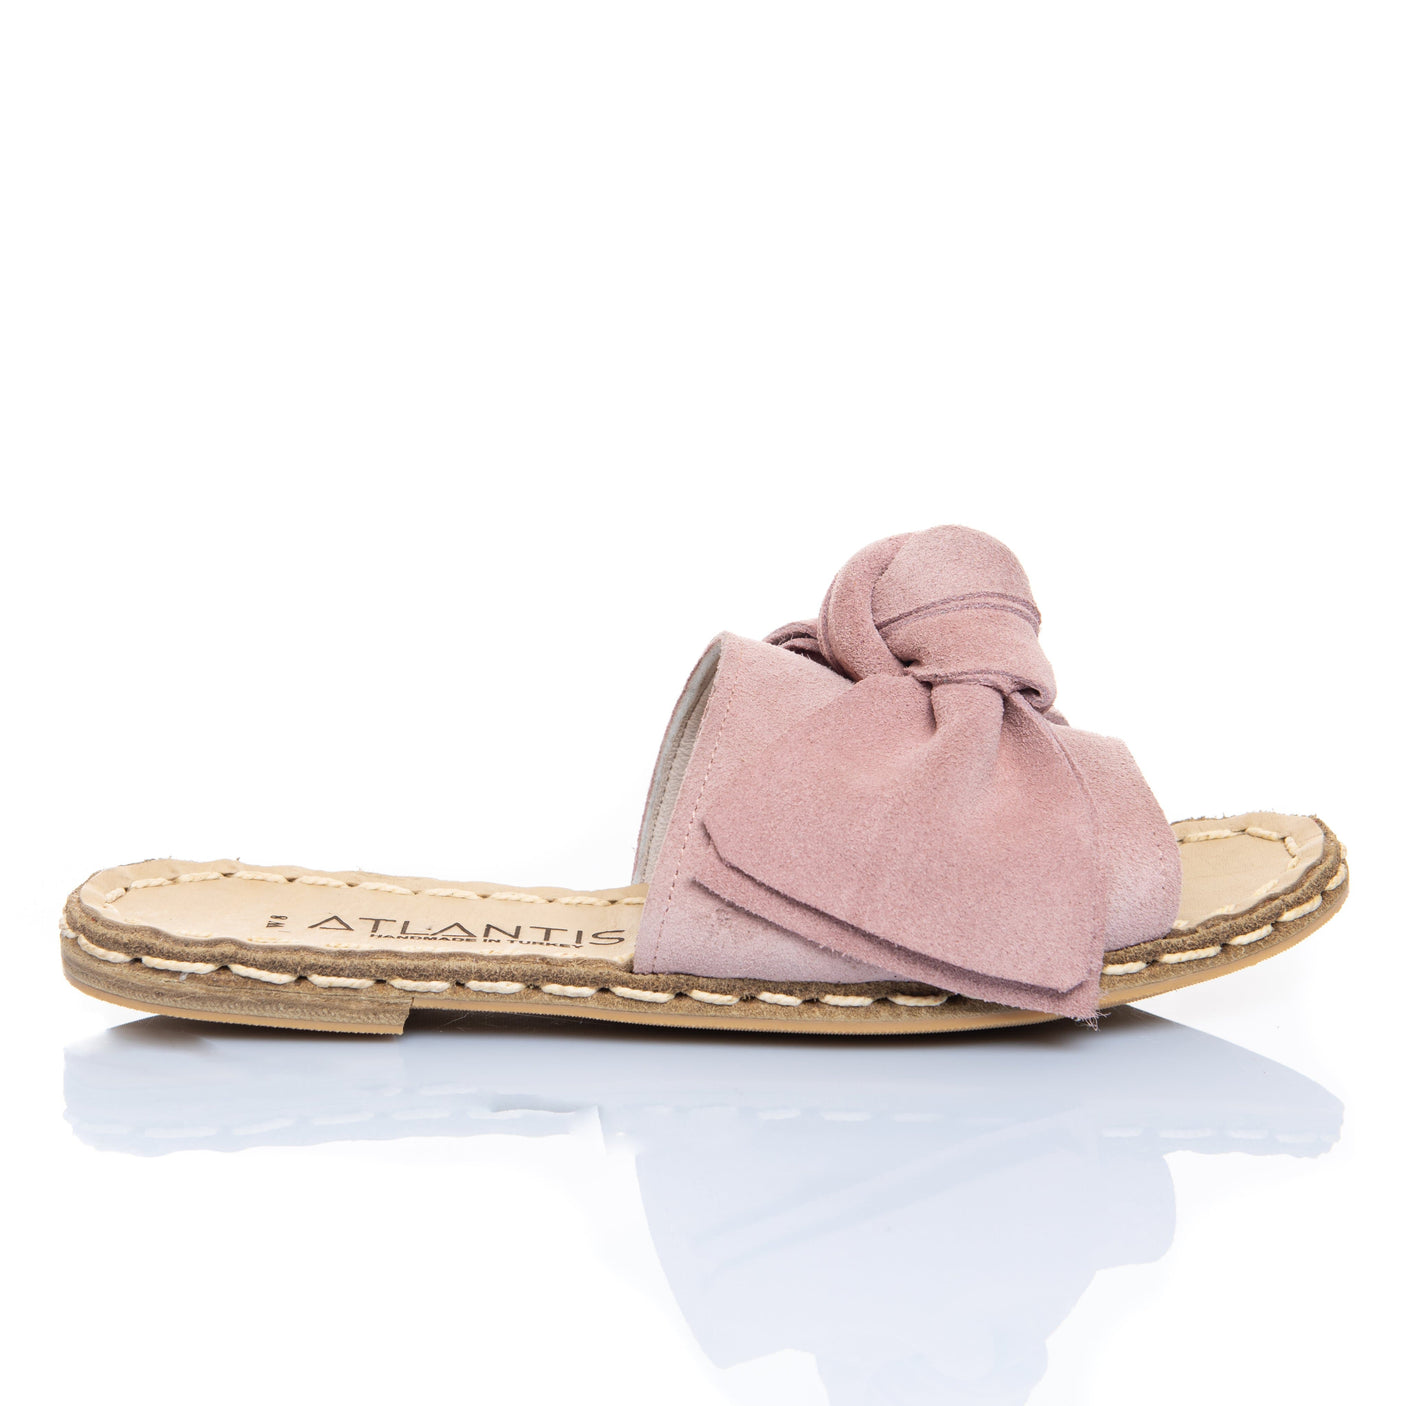 Powder Pink Bow - Turkish Sandals for Women & Men : Atlantis Handmade Shoes